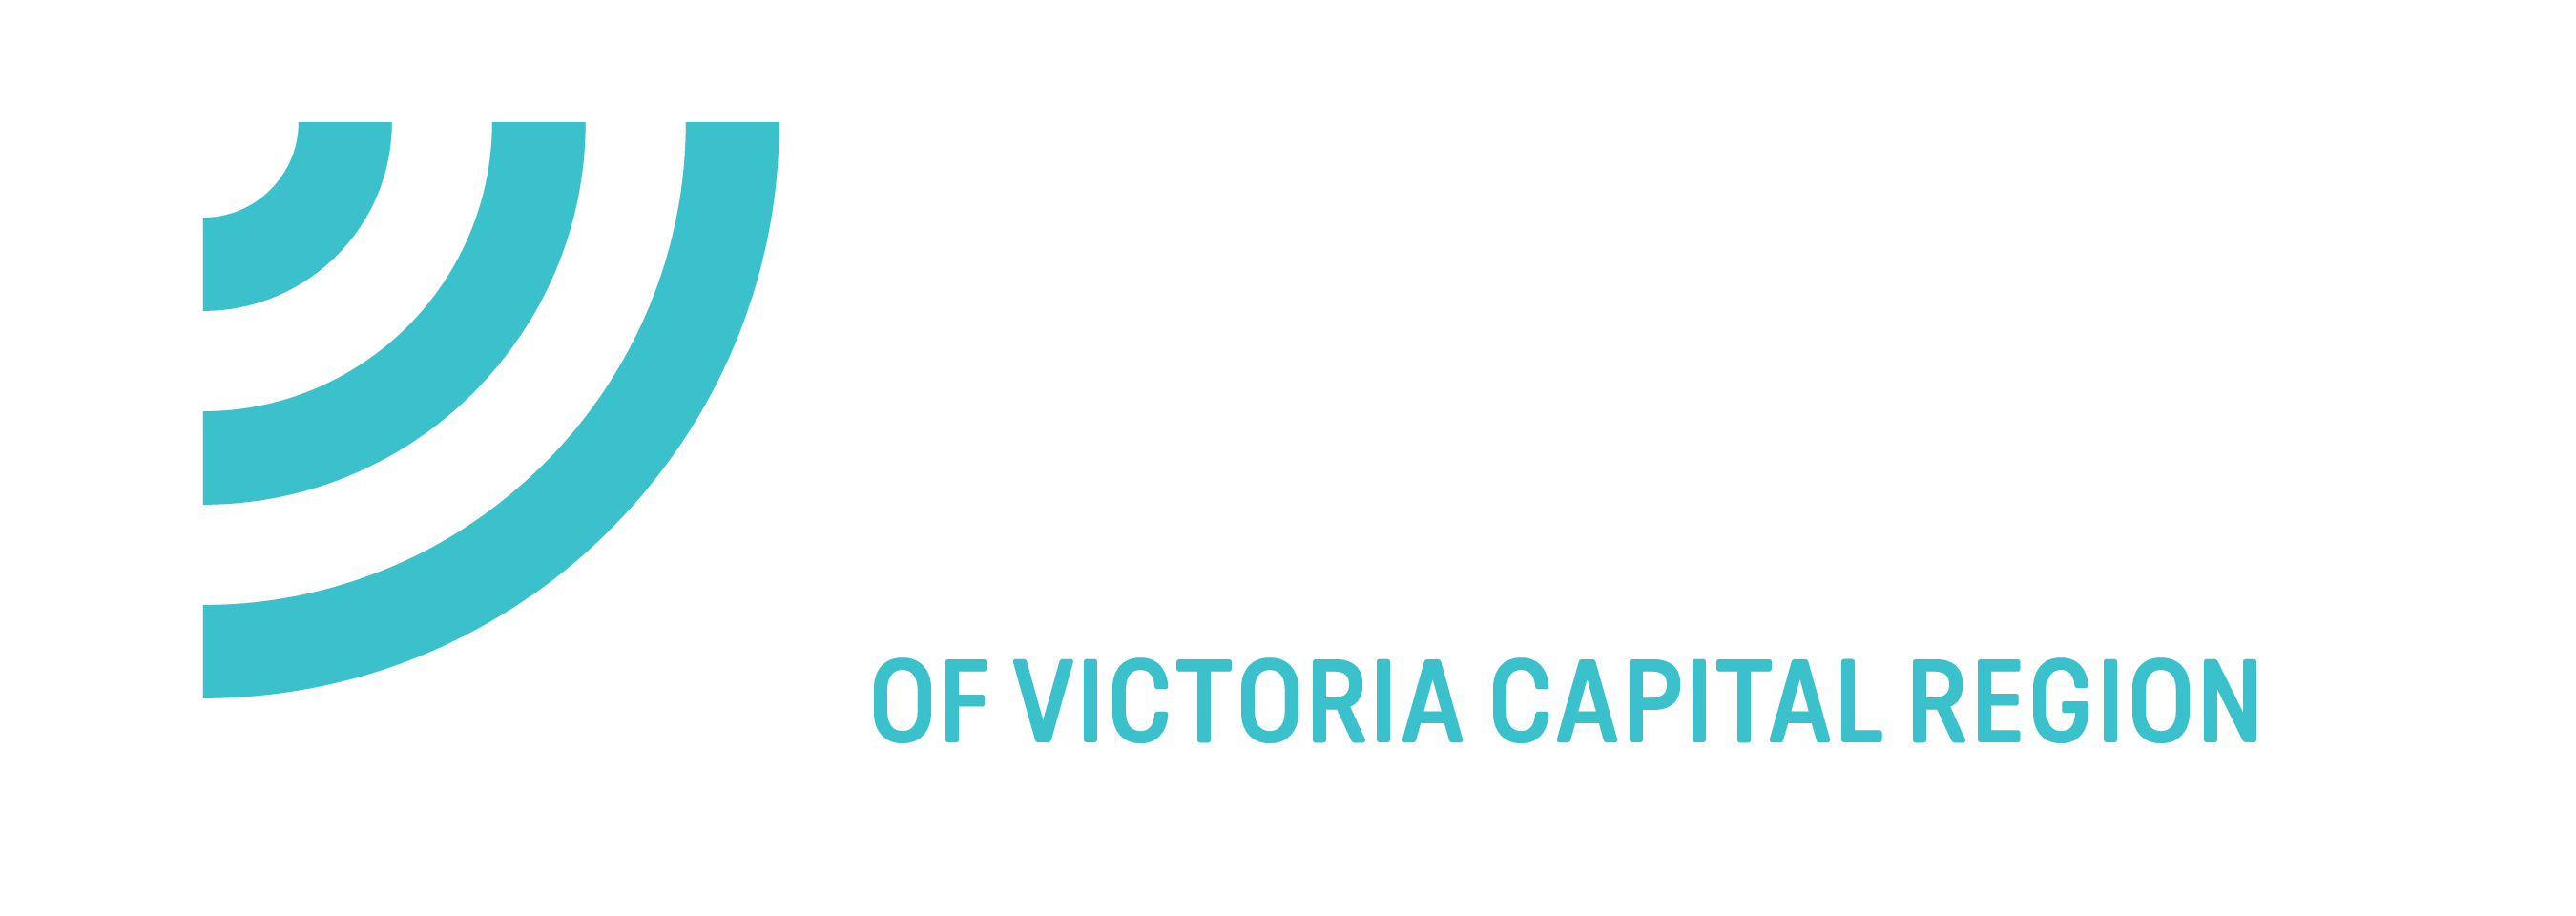 Big Steps 2 Success Referral Form - Big Brothers Big Sisters of Victoria Capital Region